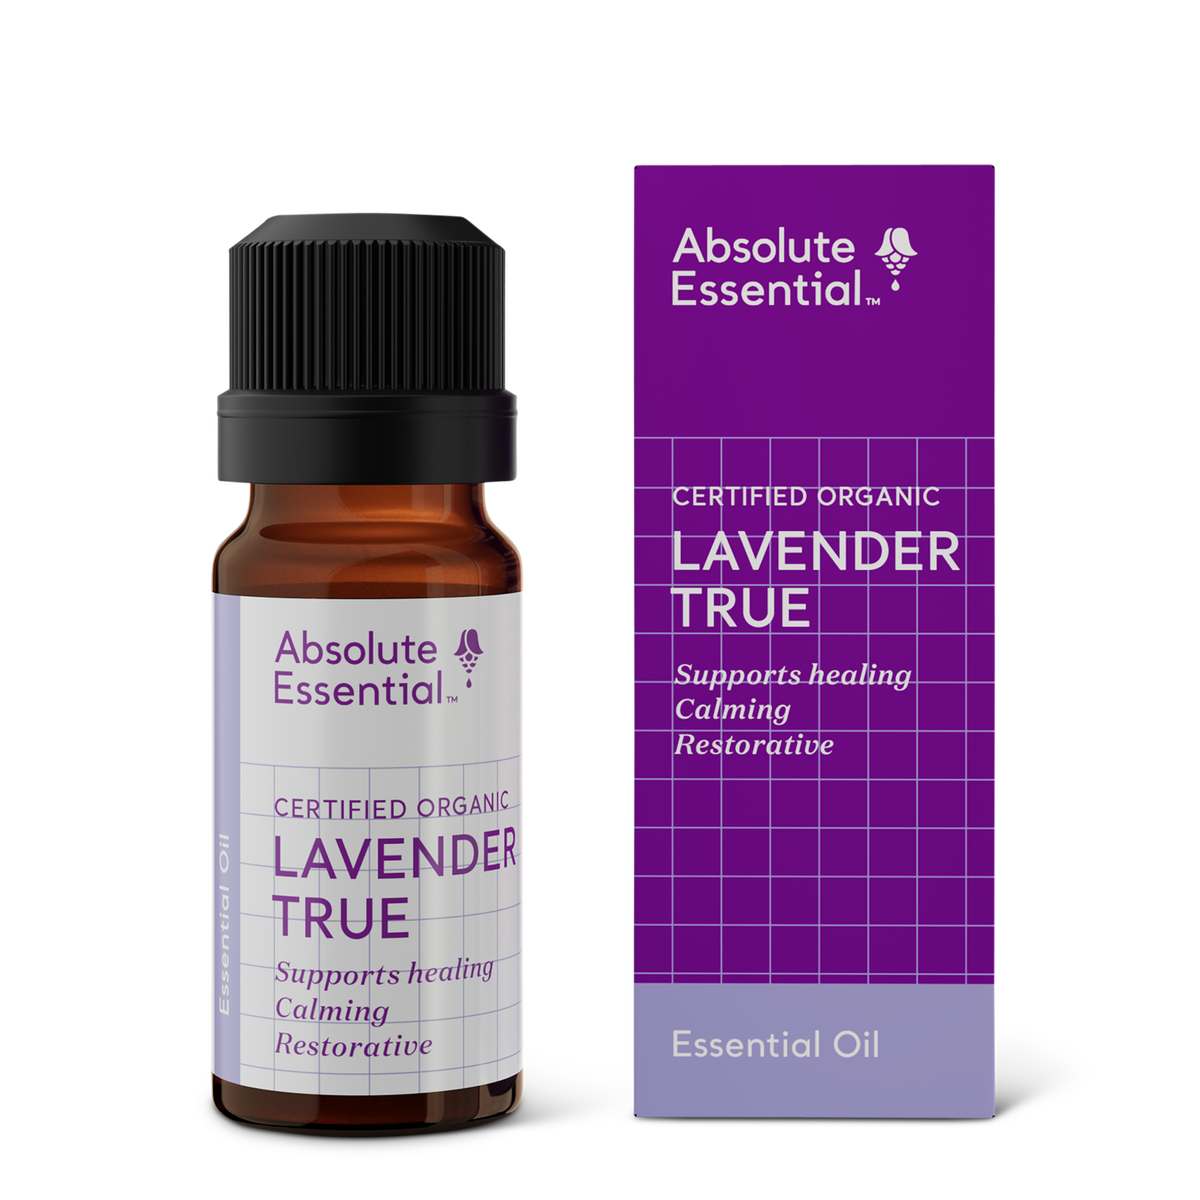 Absolute Essential Lavender True Oil